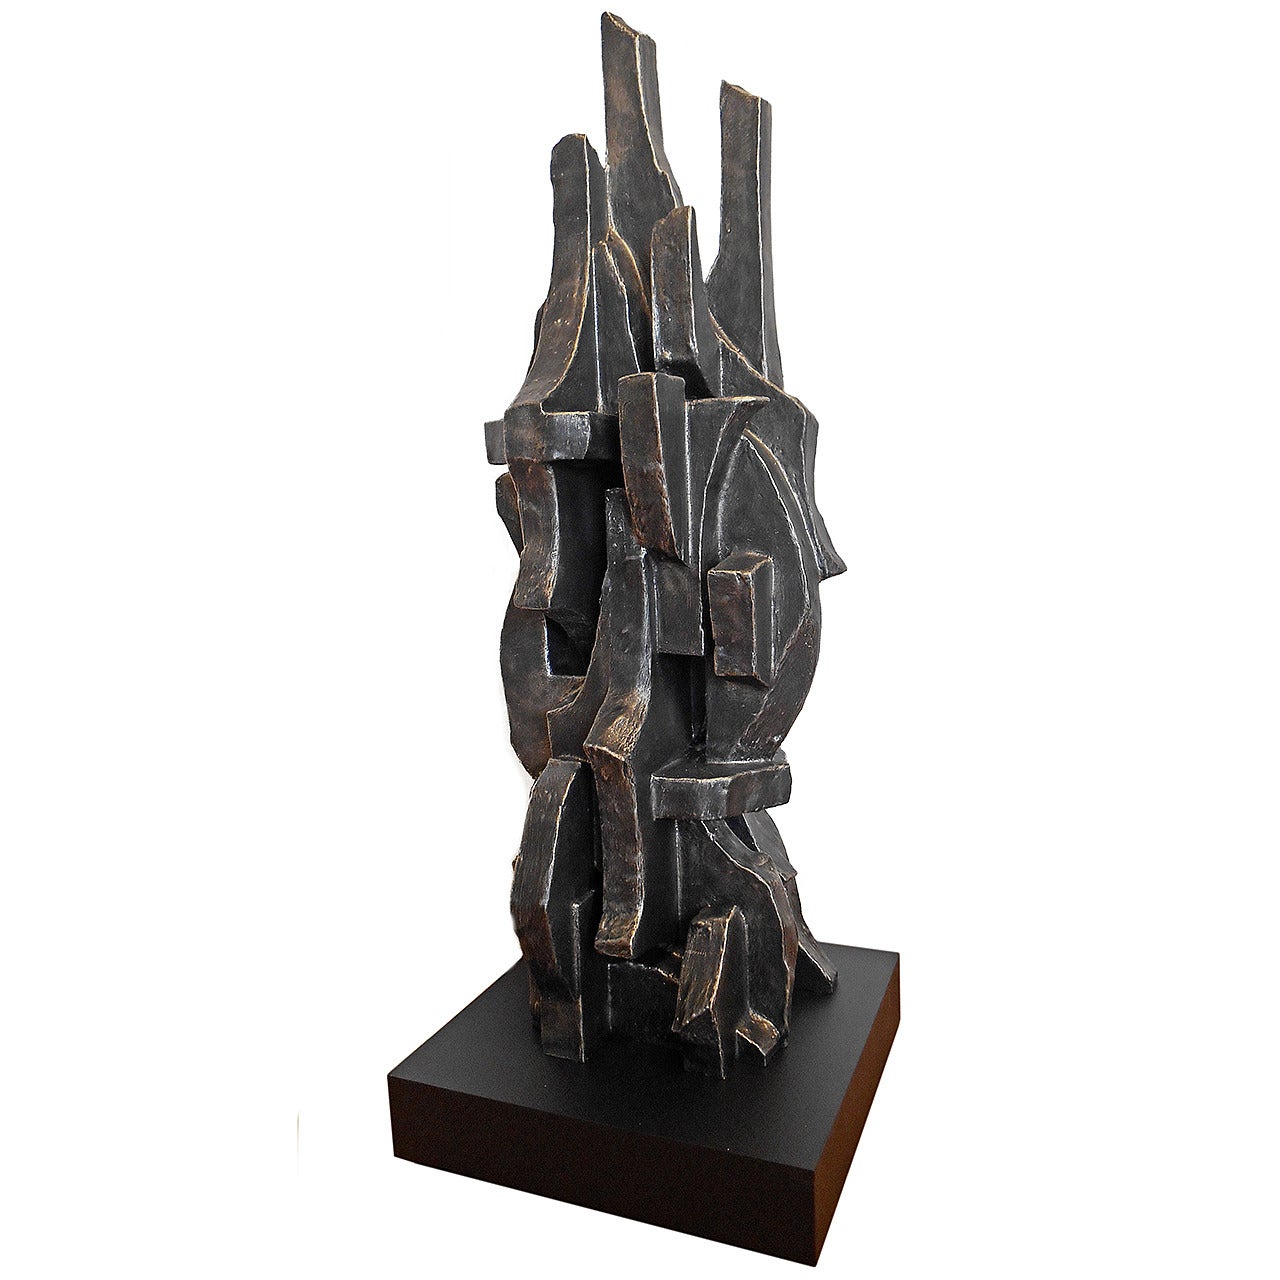 "Cities in Dust II" Totem Sculpture by Dan Schneiger